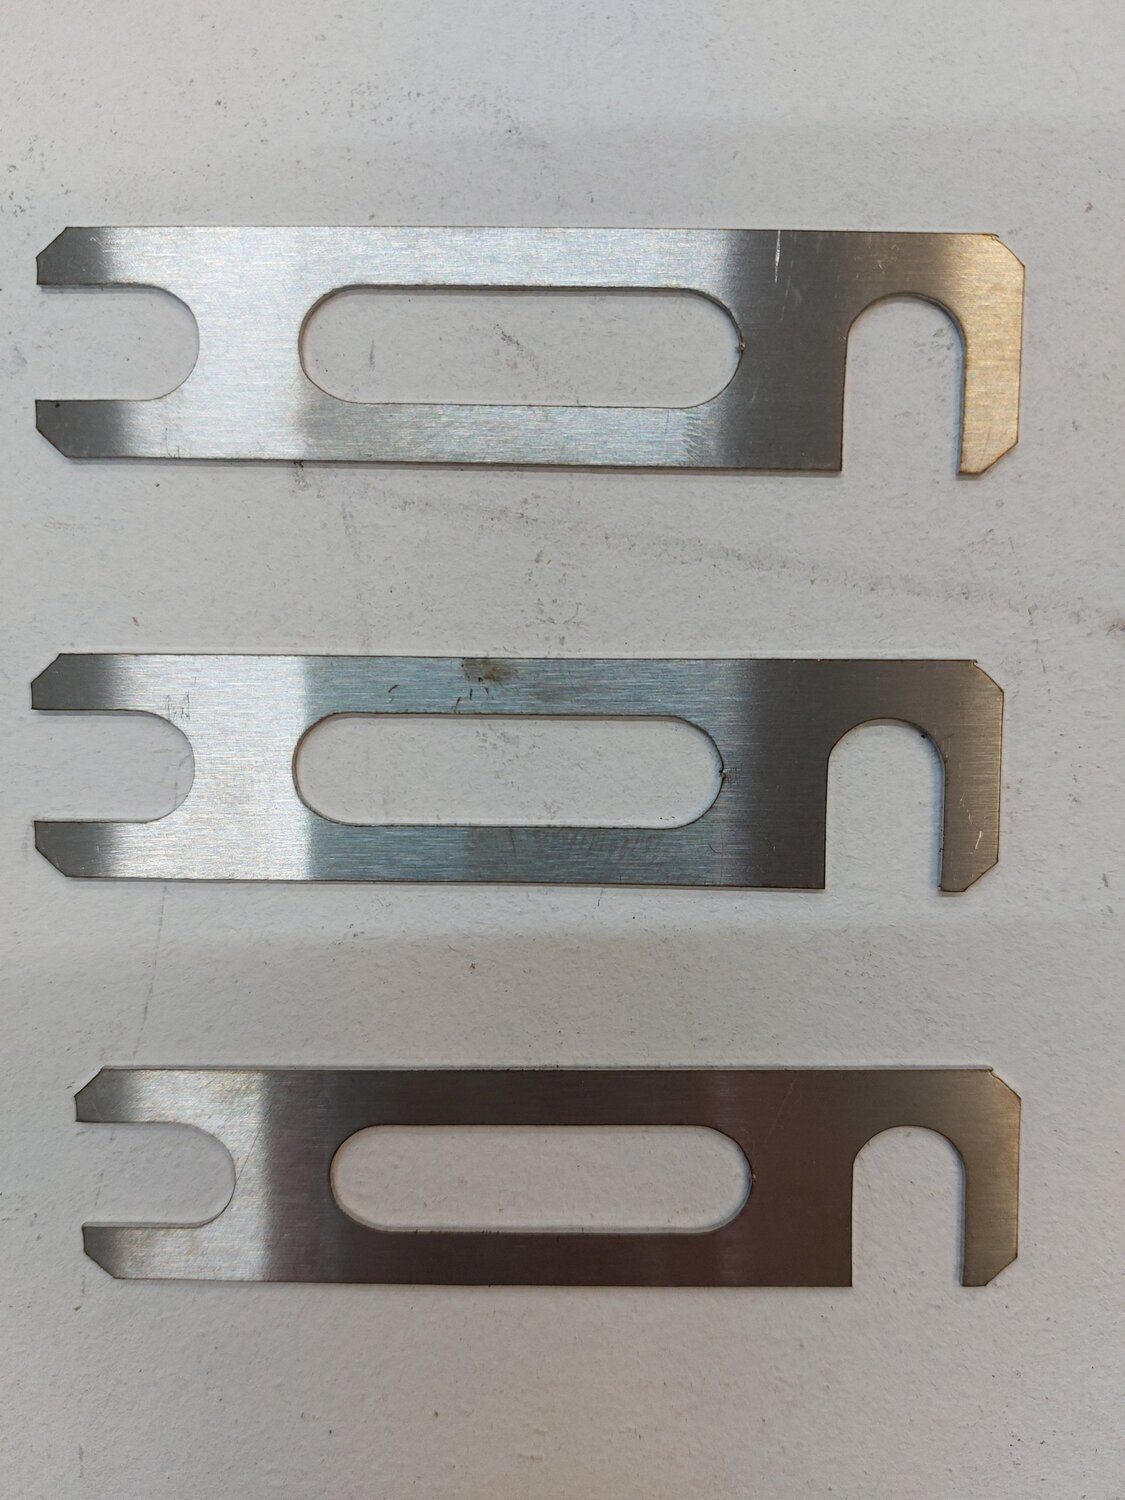 vx220 elise exige 1mm stainless steel shim